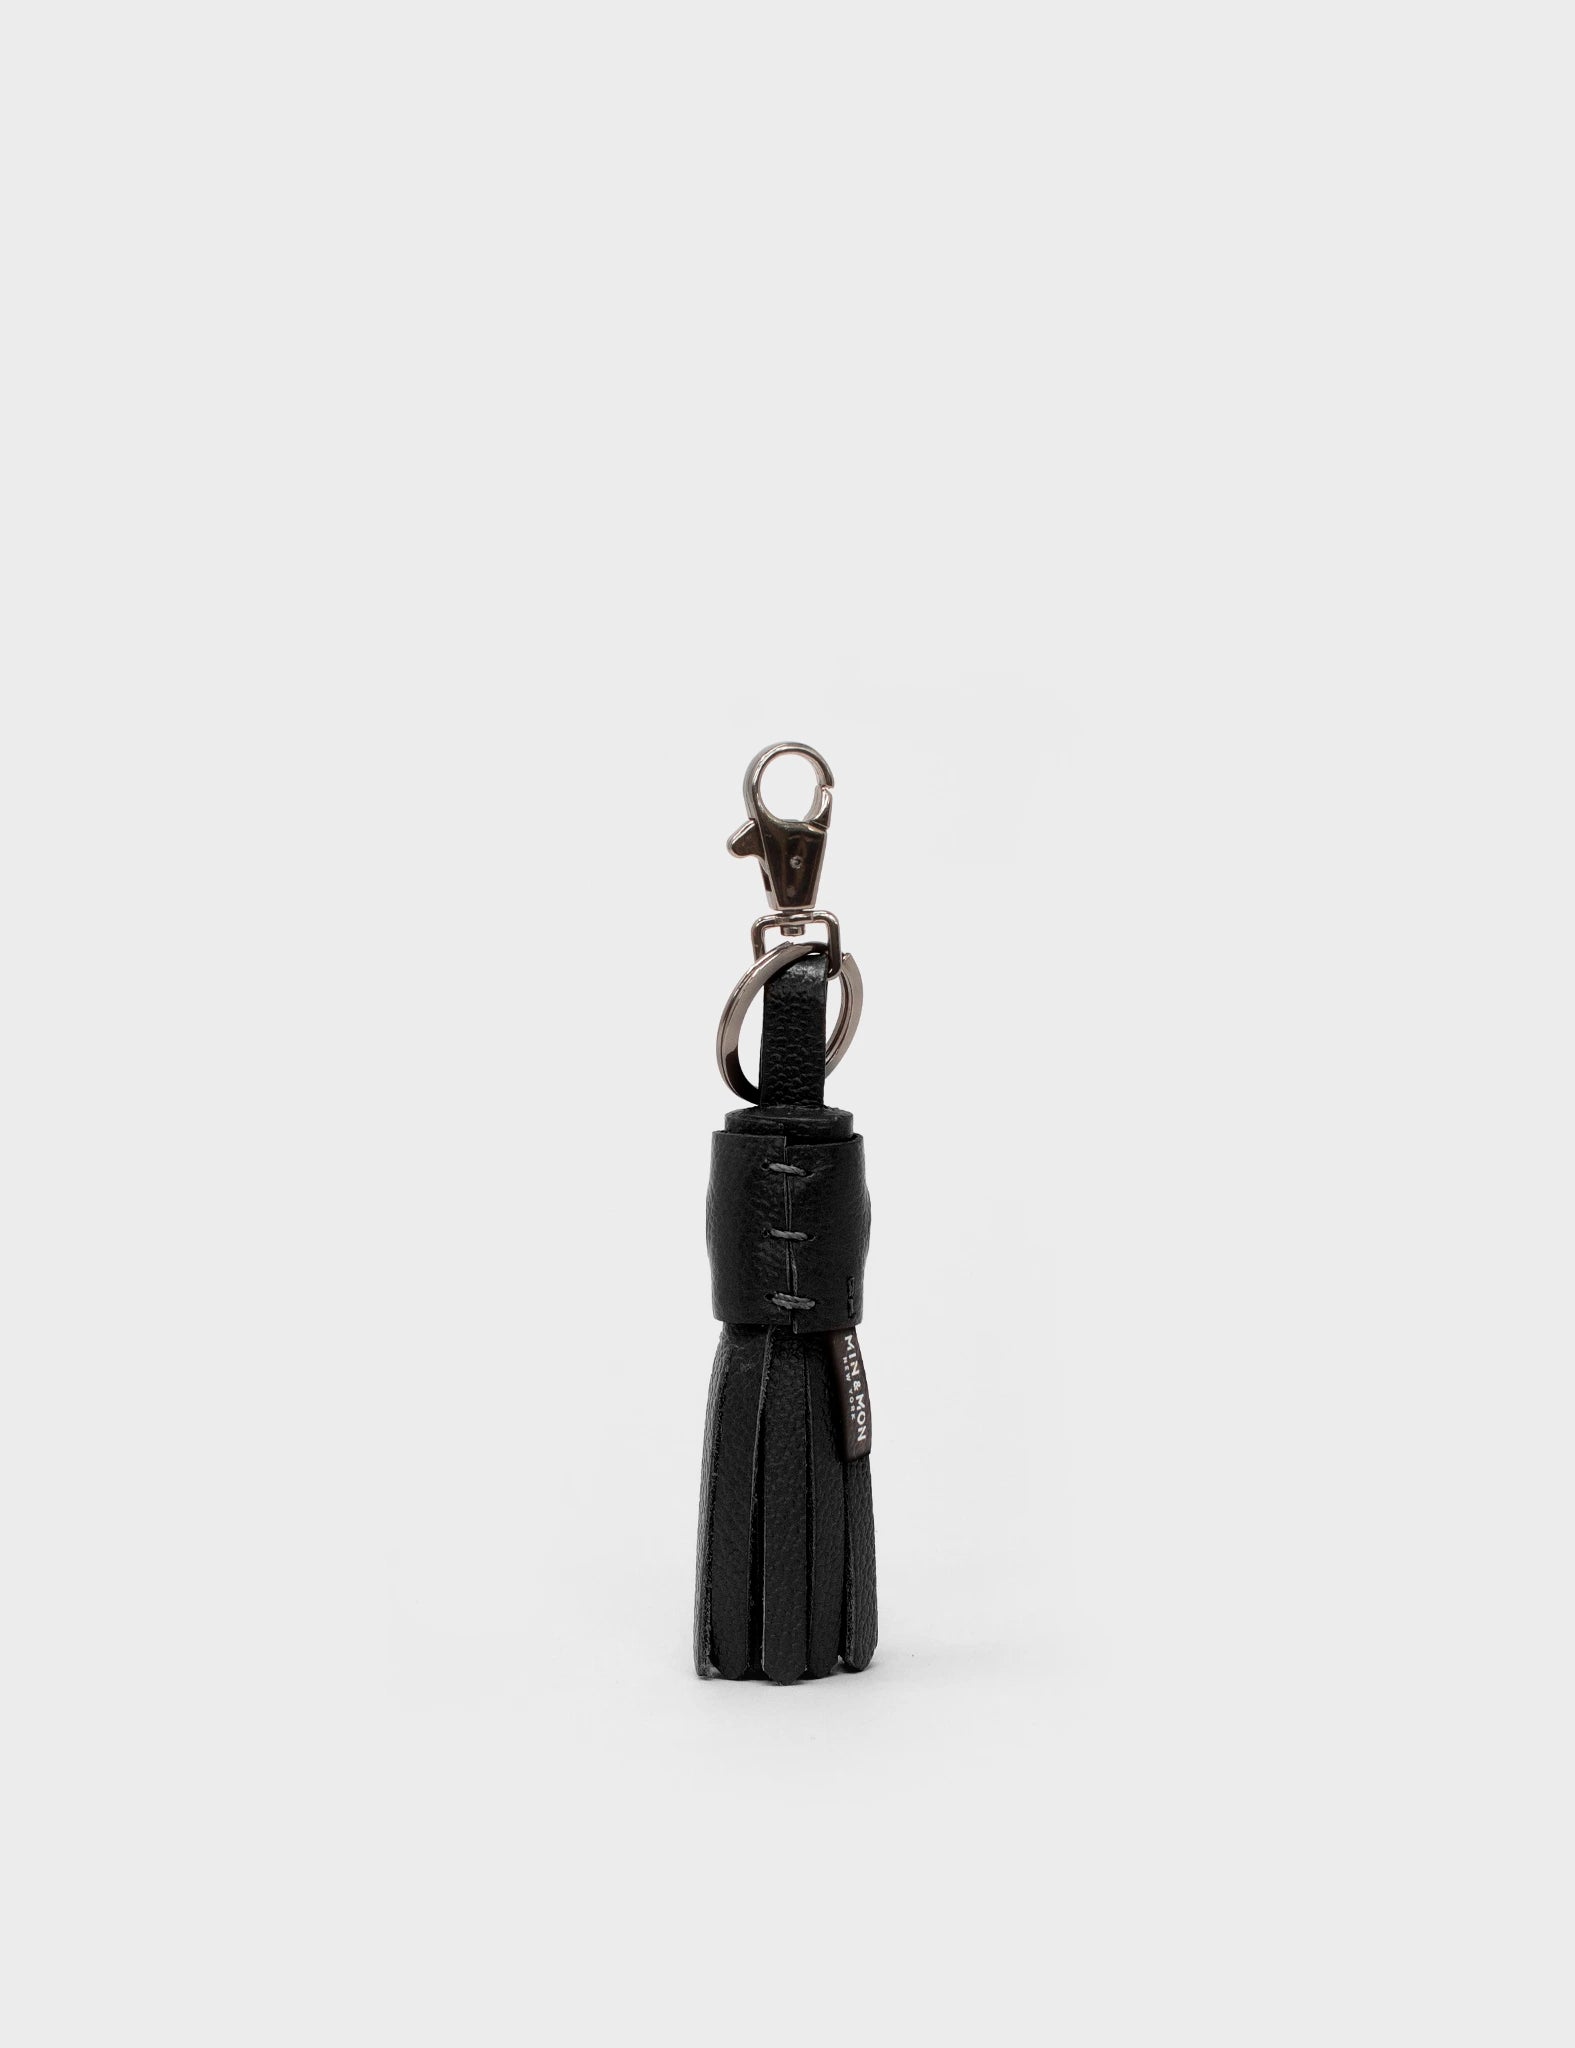 Tassel Squid Callie Marie Hue Charm - Black Leather Keychain - Back